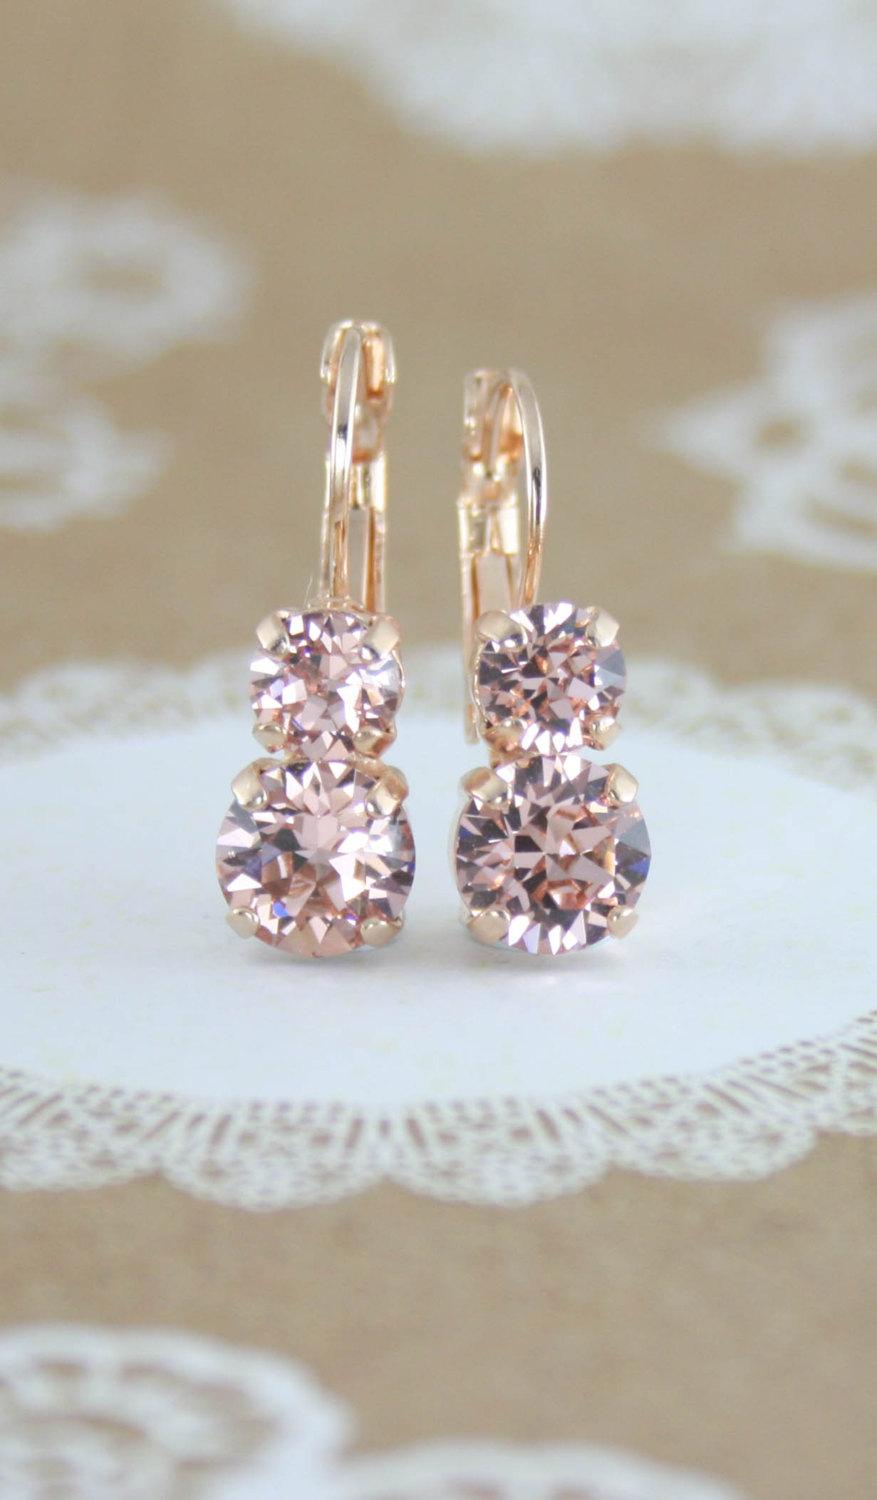 Hochzeit - Blush earrings,blush crystal earrings,blush bridesmaid earrings,swarovski blush,rose gold earrings,rose gold blush earrings,blush wedding